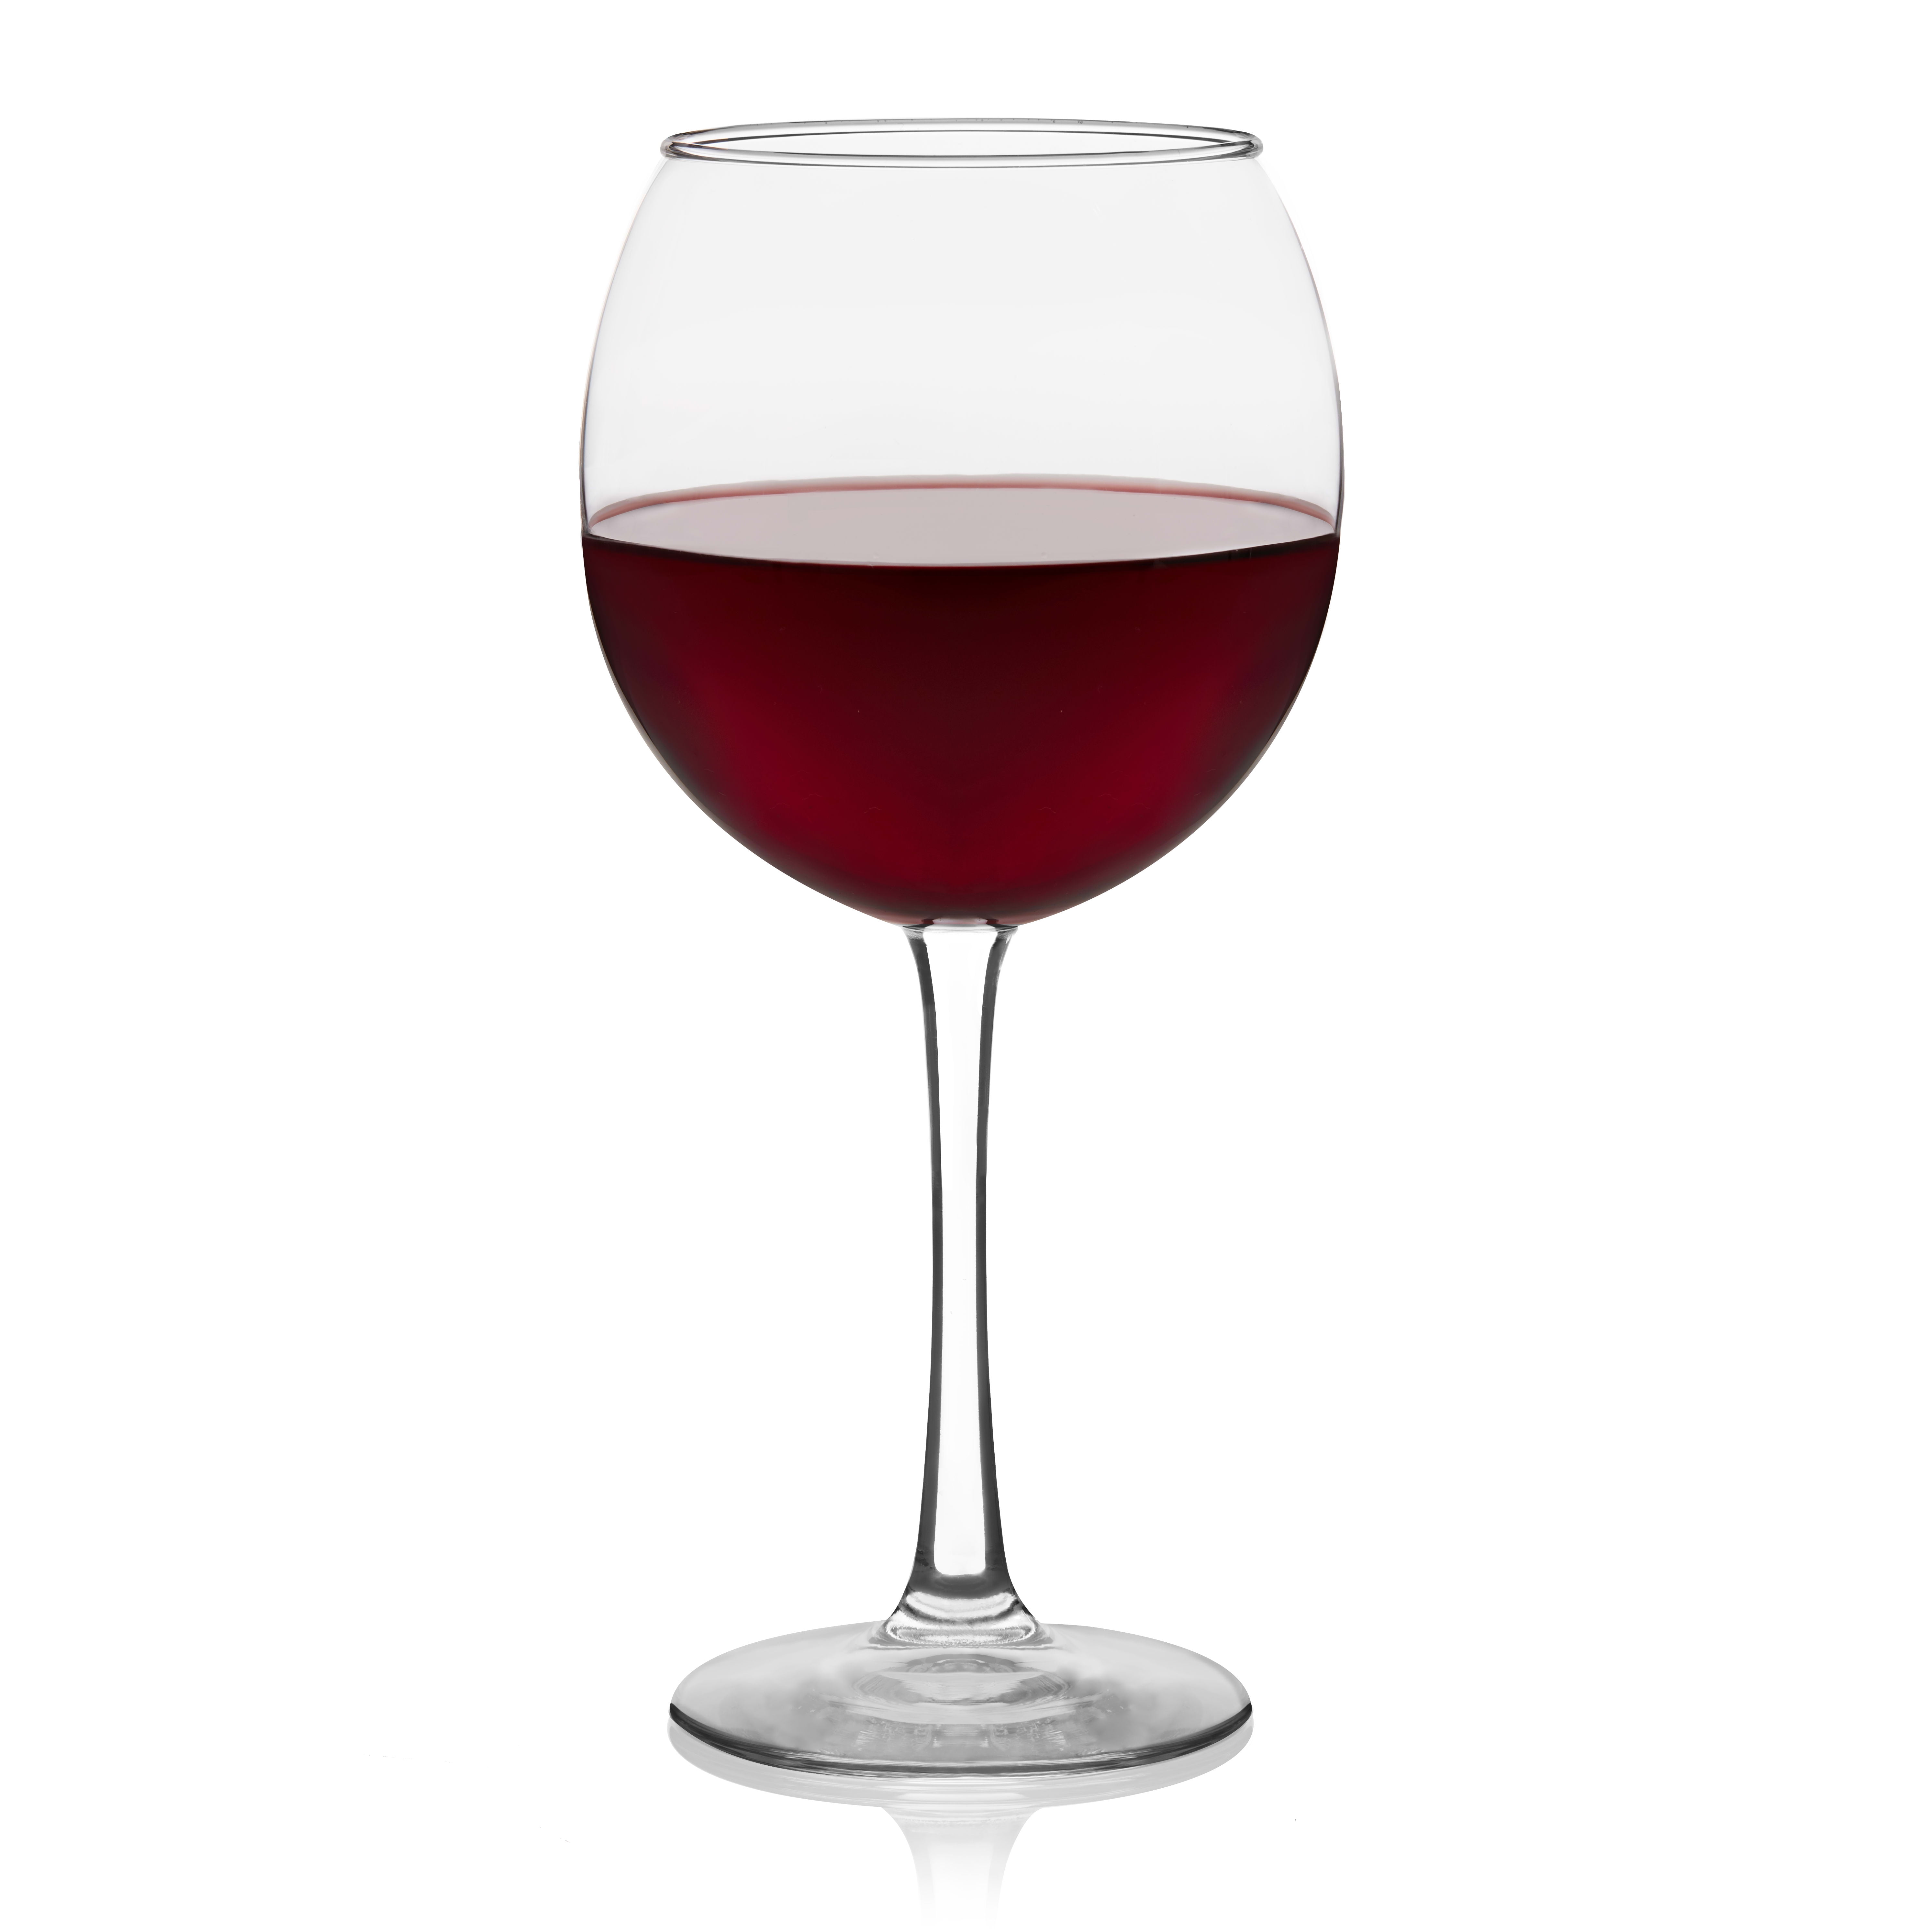 Libbey 7510 Libbey Stemware Vina 16 oz. Tall Wine Glass, Case of 1 Dozen